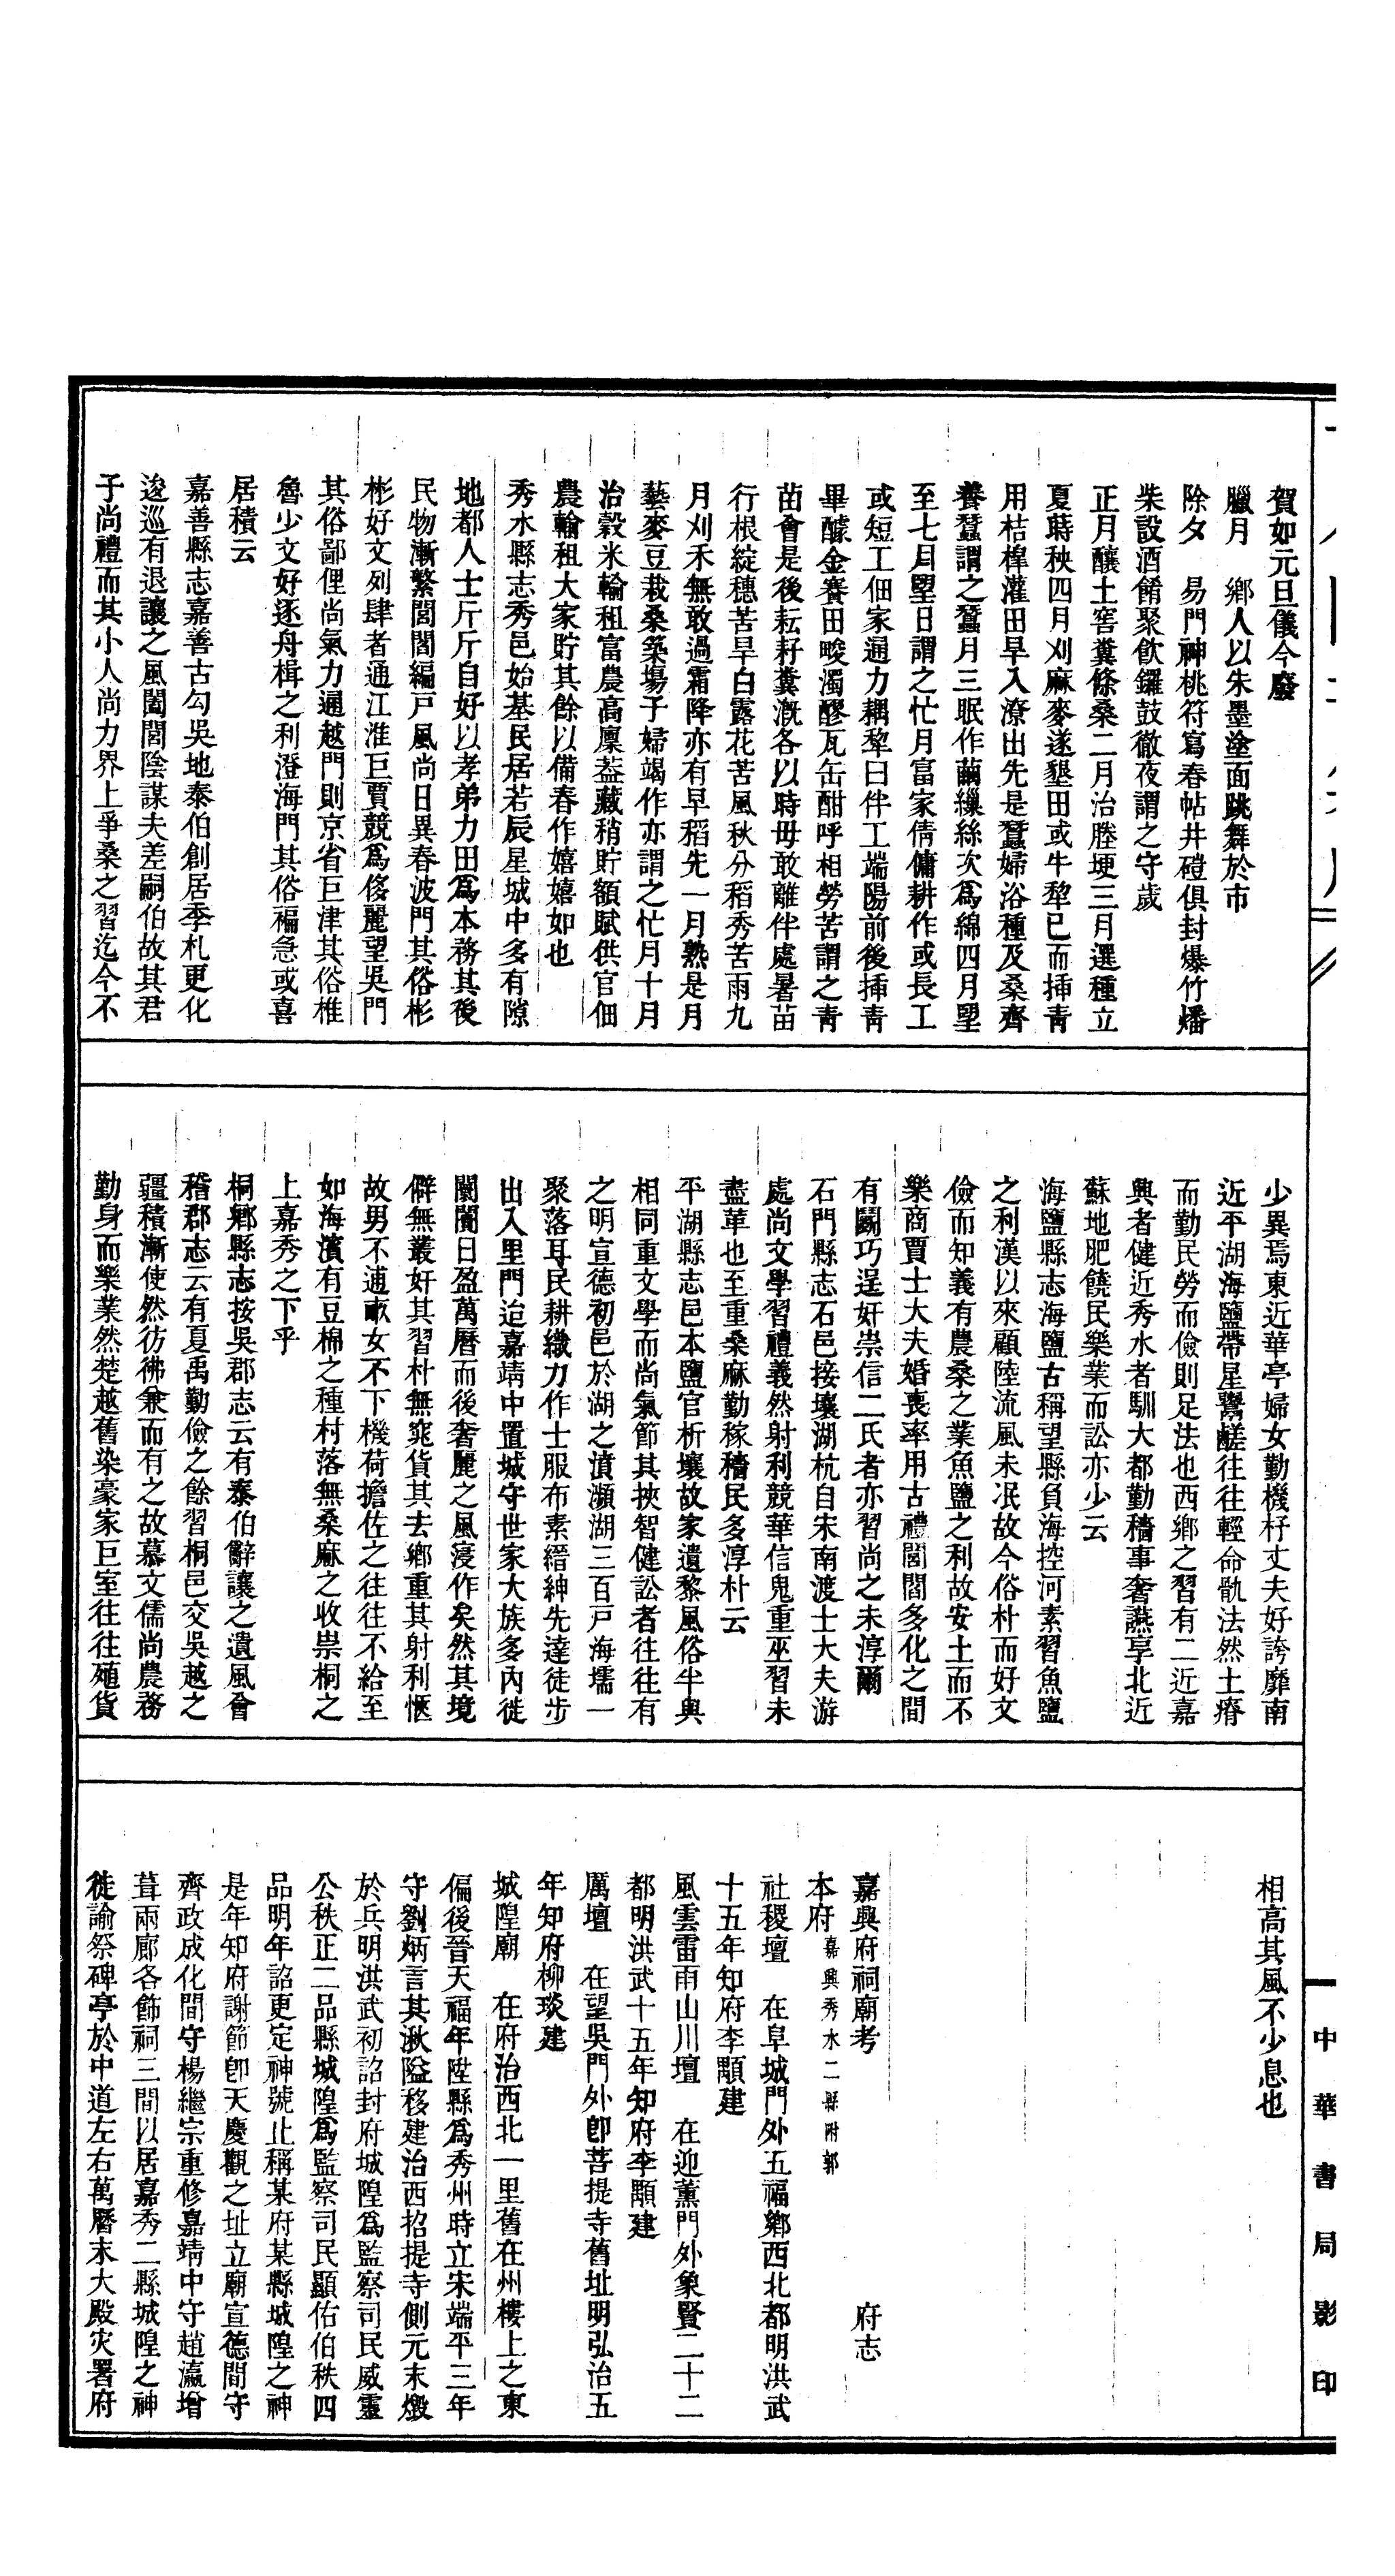 Page Gujin Tushu Jicheng Volume 136 1700 1725 Djvu 33 维基文库 自由的图书馆